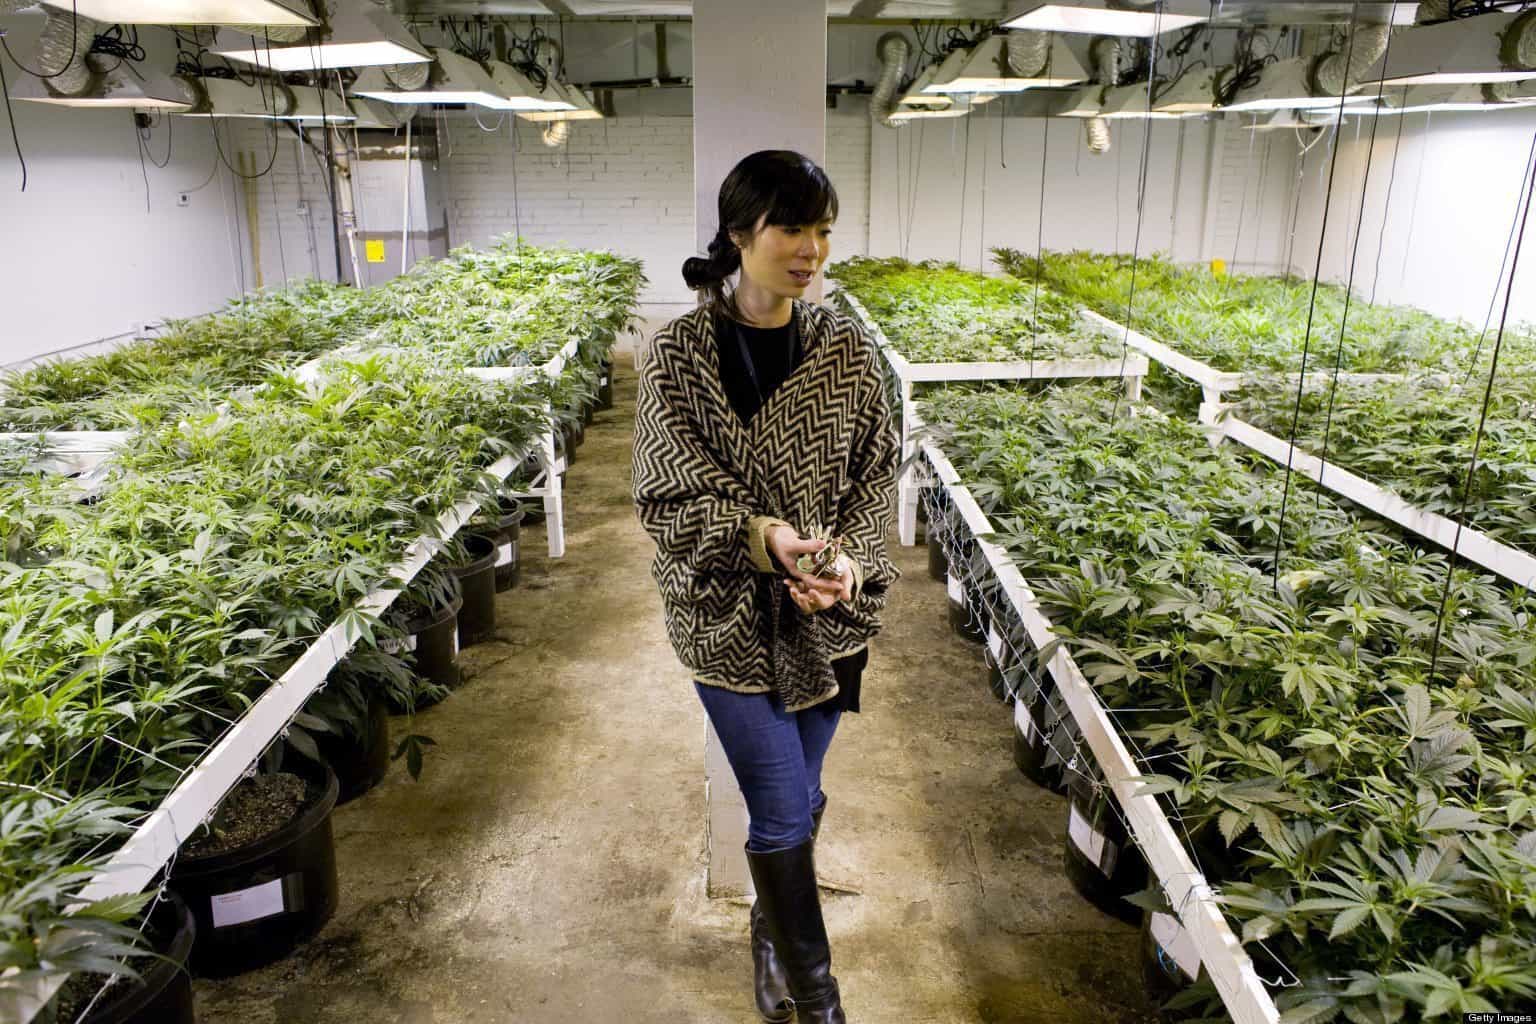 Marijuana Legalization in Colorado 2 Years Later